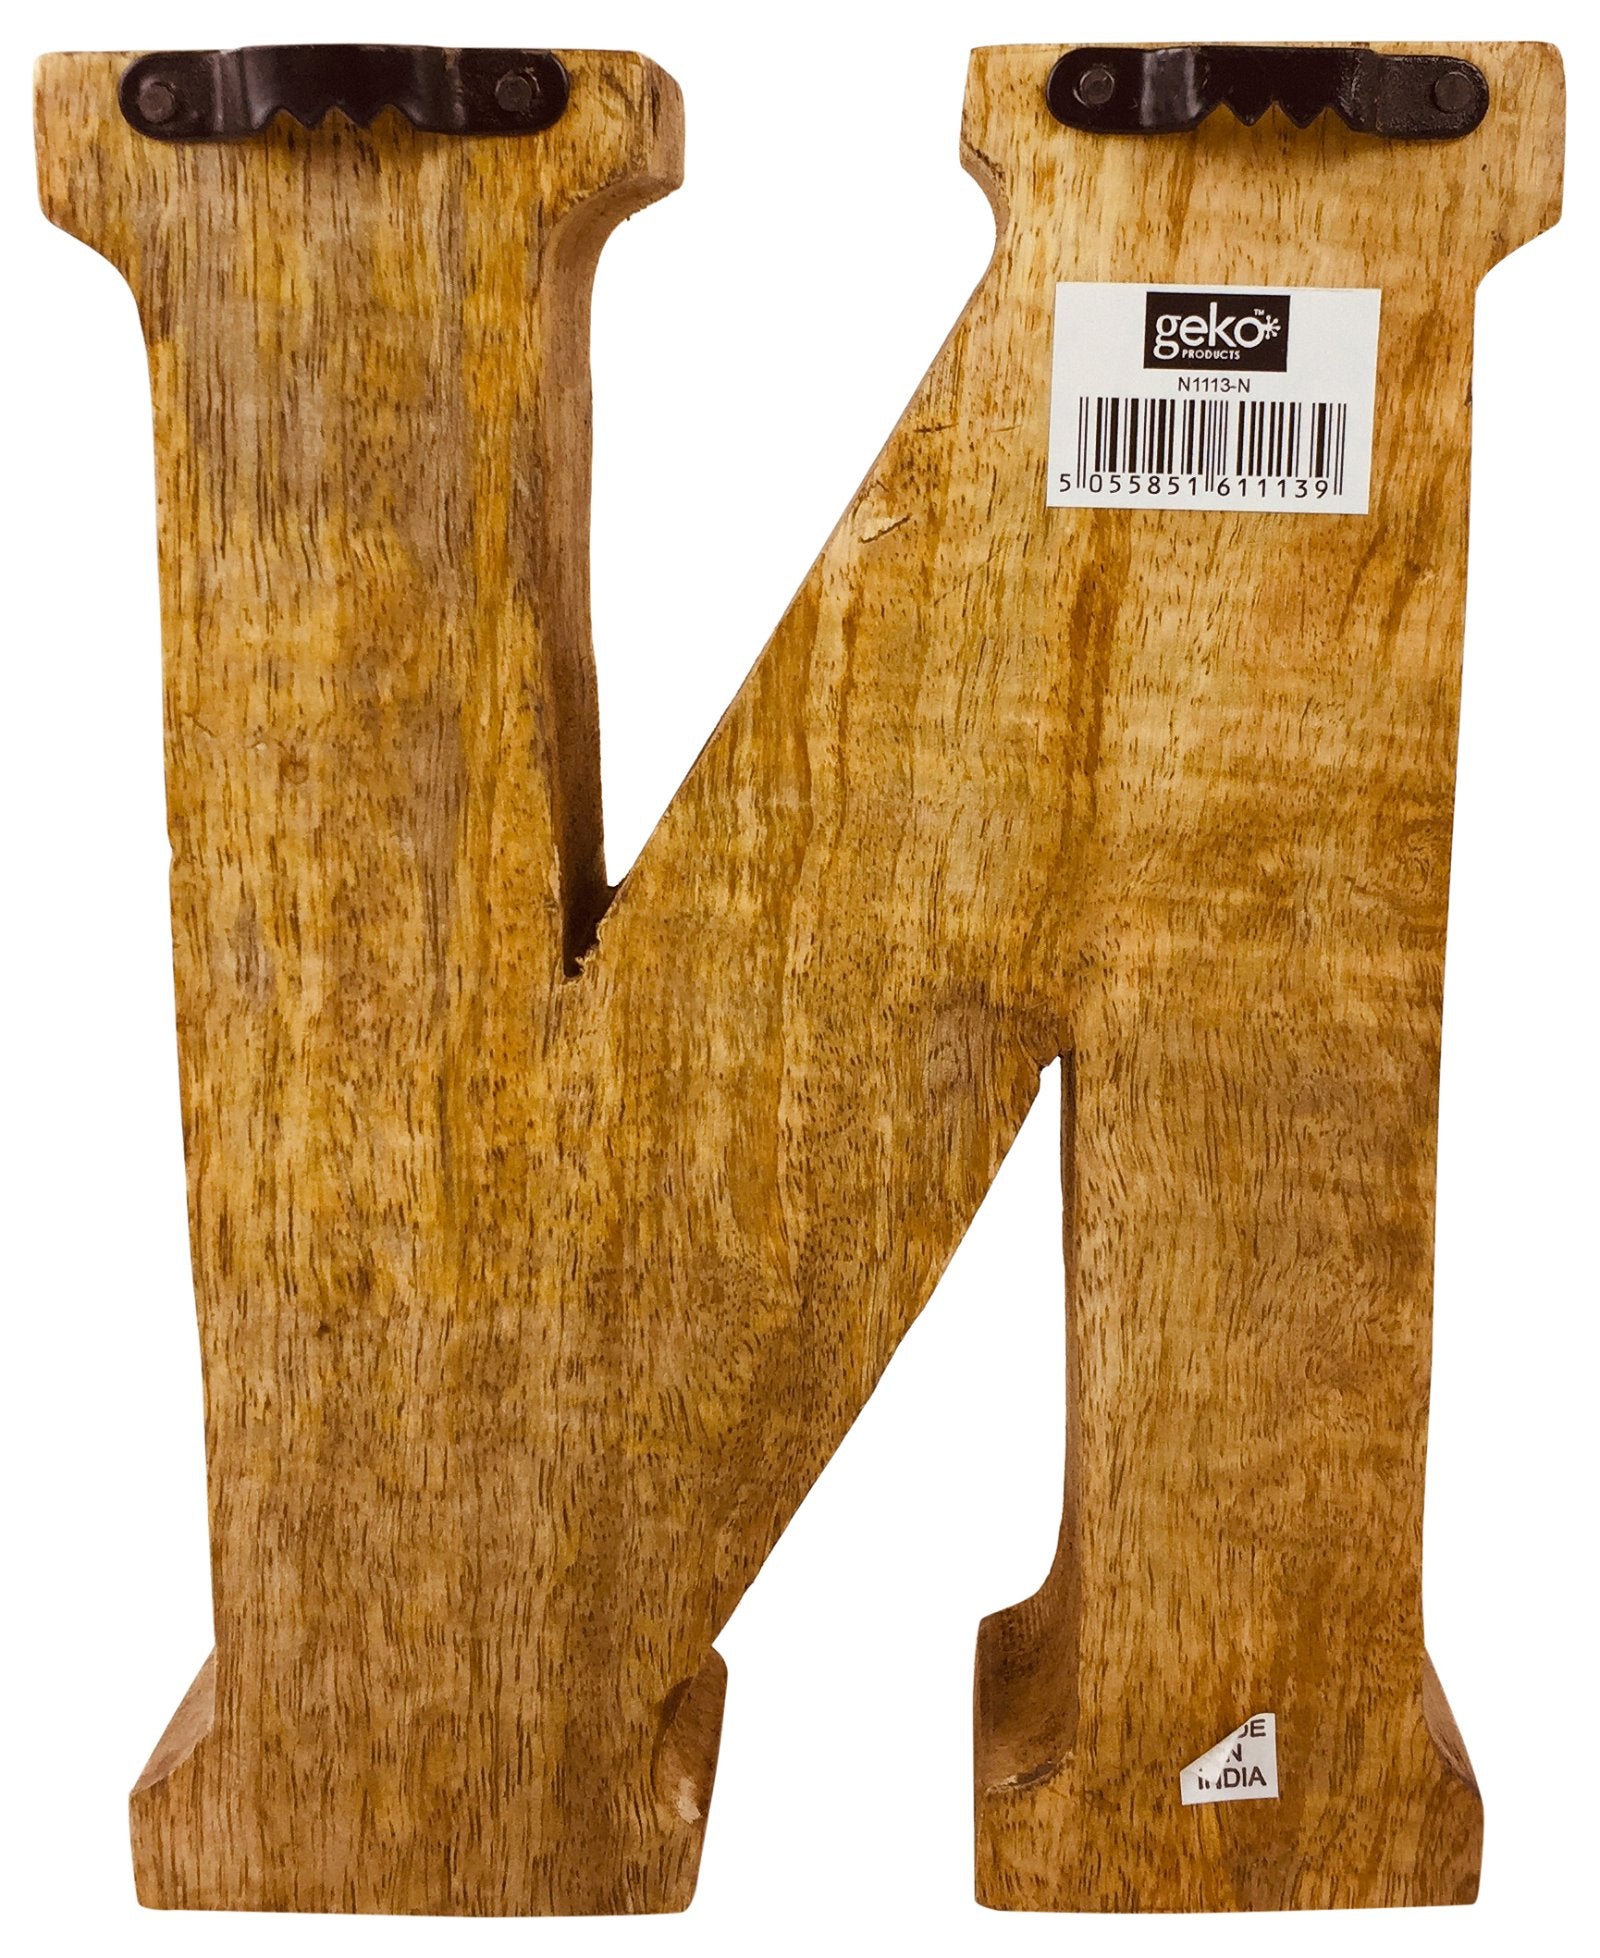 Hand Carved Wooden Embossed Letter N